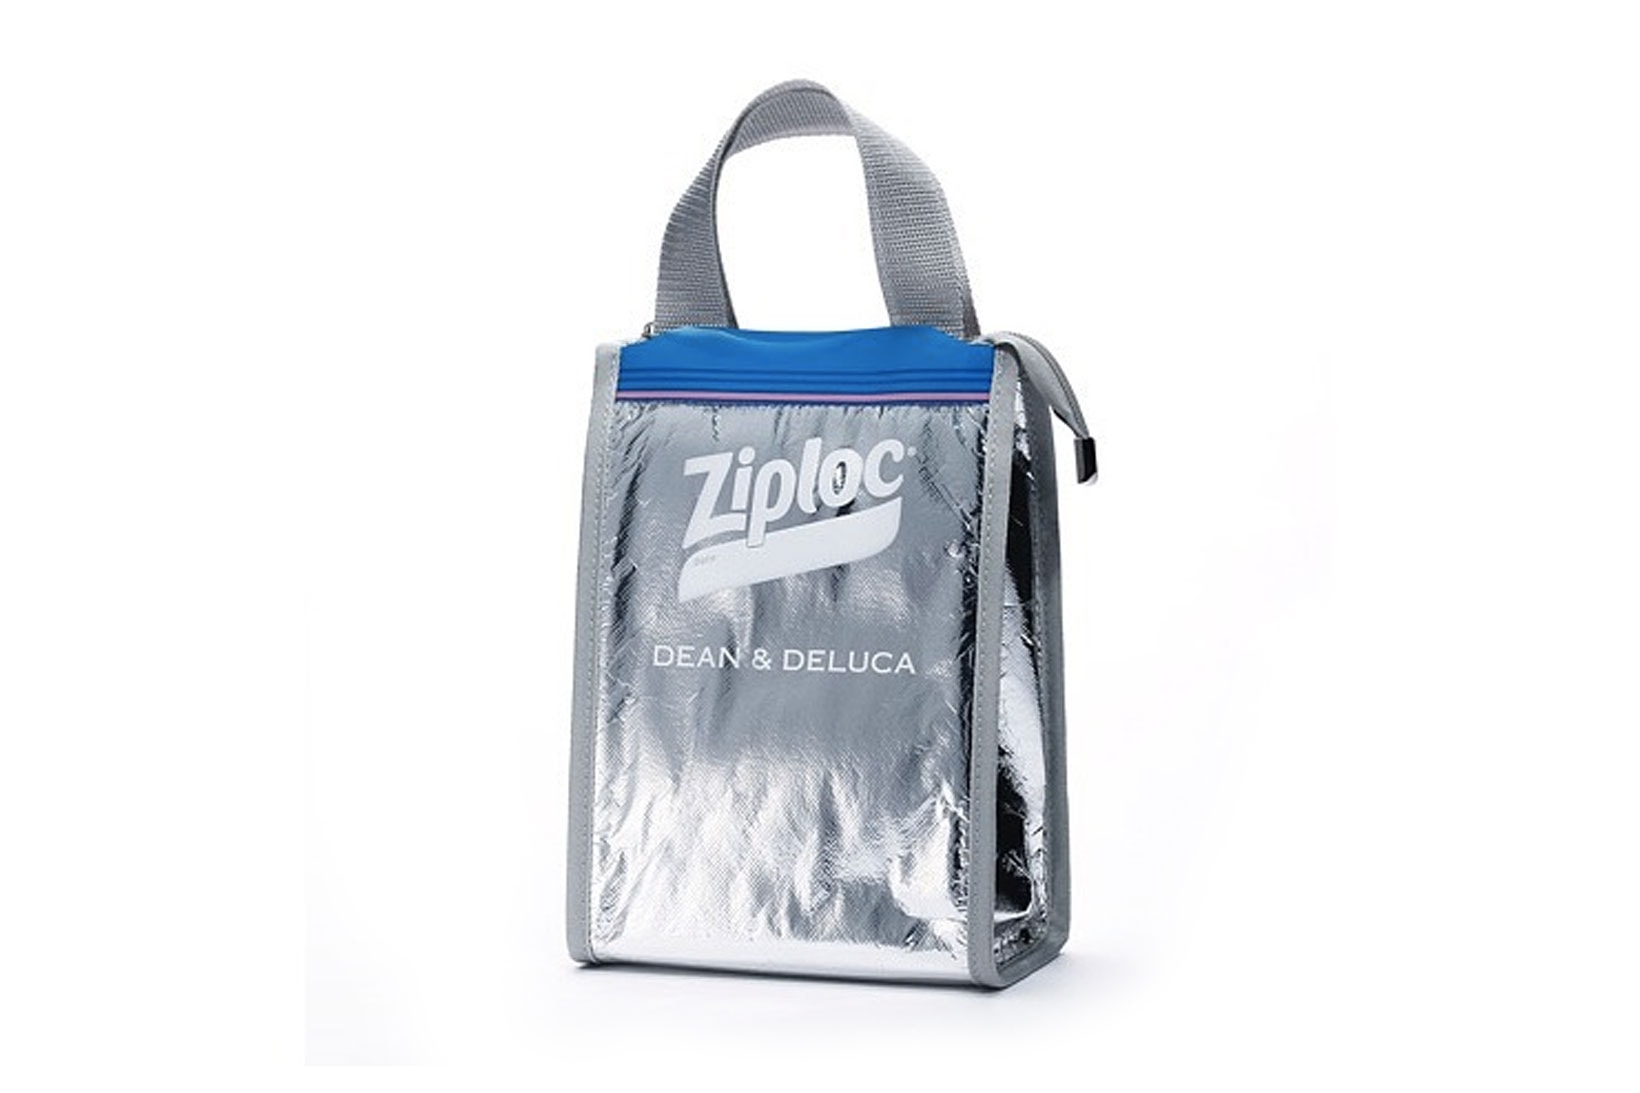 beans dean & deluca ziploc cooler freezer bags pvc tote shopper price where to buy